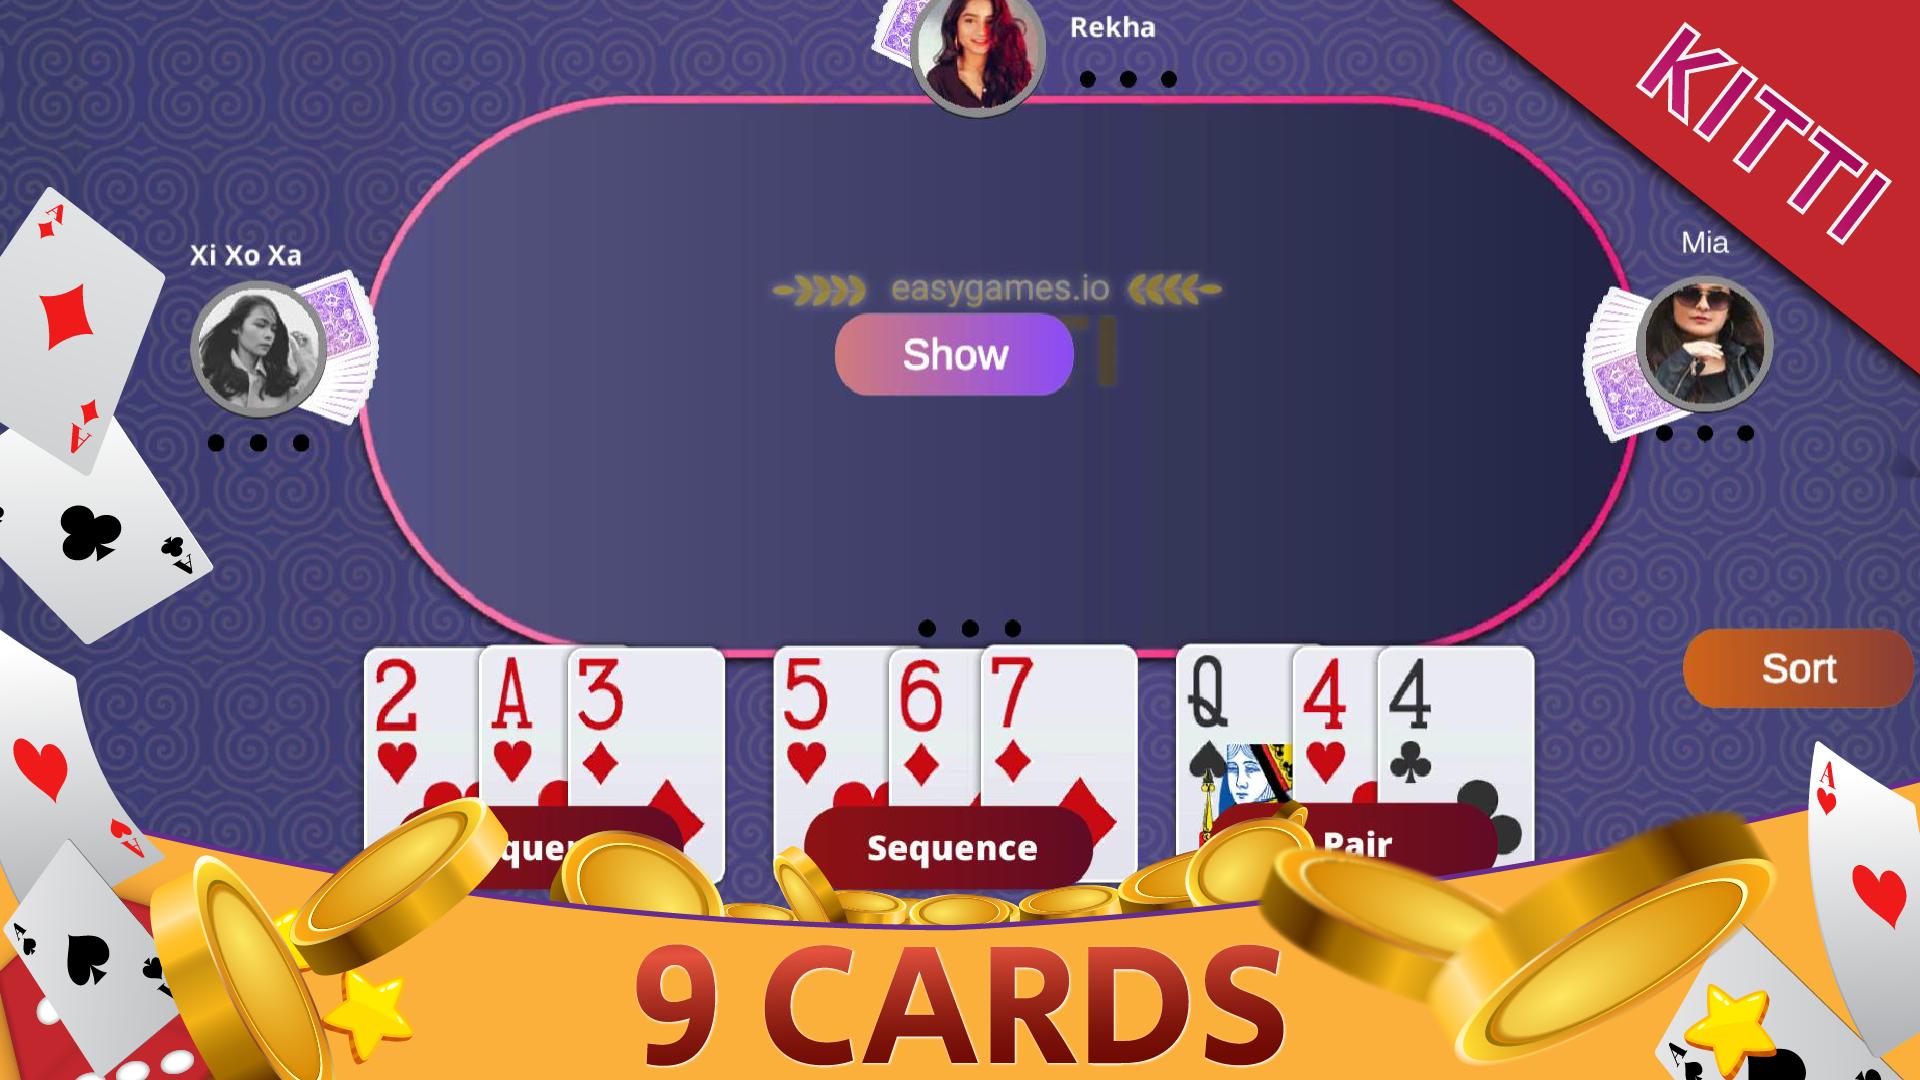 Callbreak, Ludo, Rummy & 9 Card Game -Easygames.io 20210120 Screenshot 4